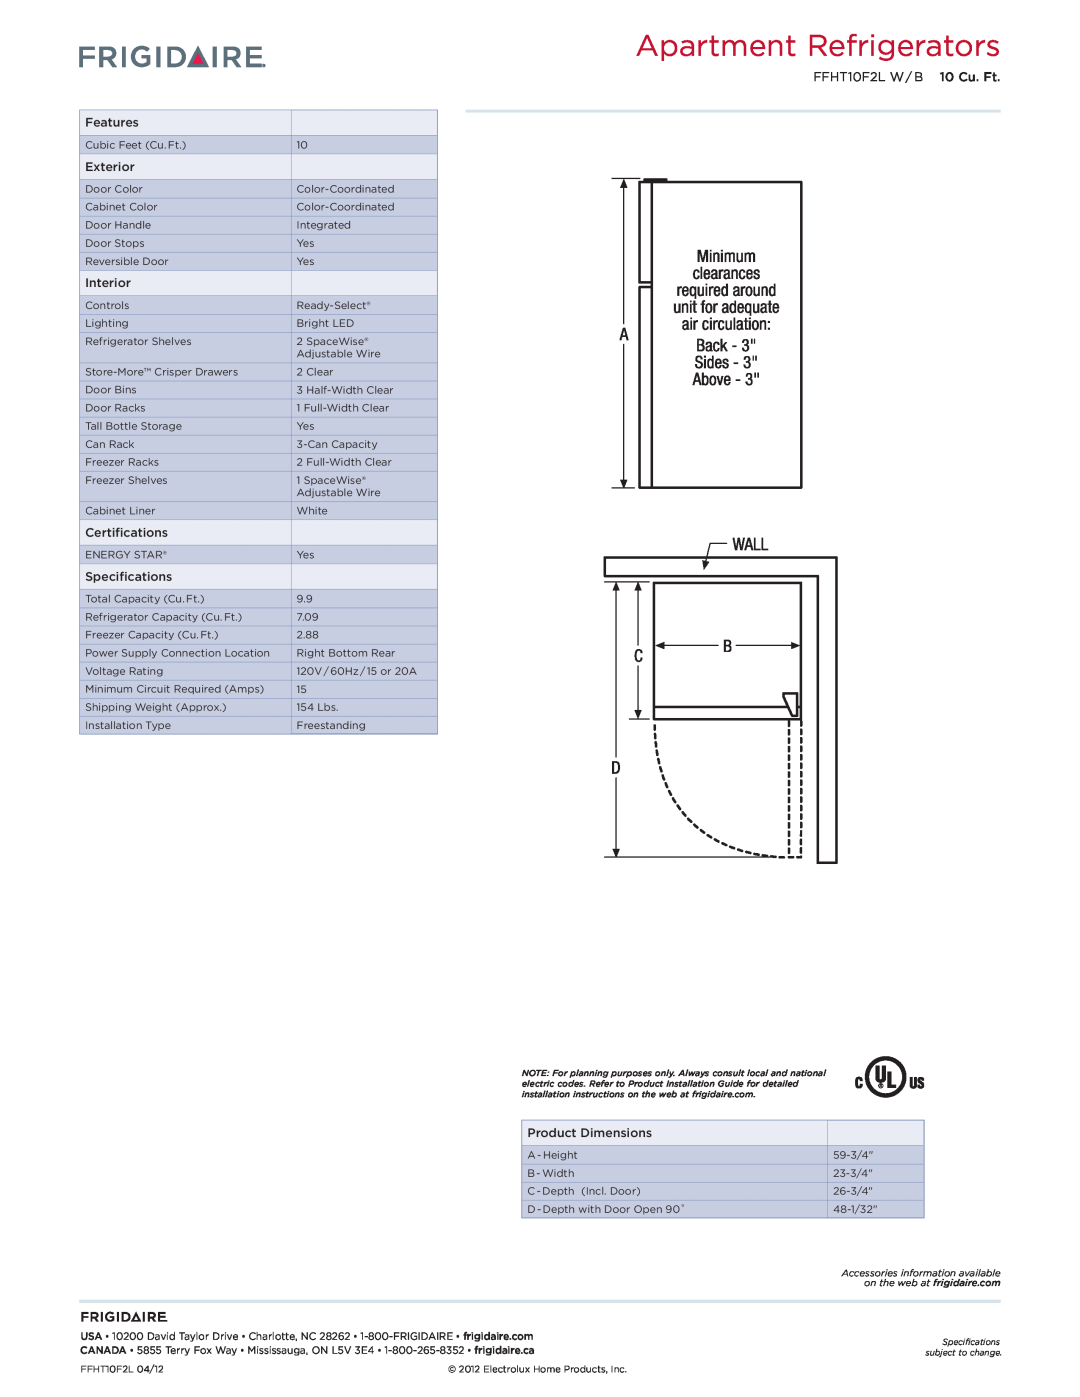 Frigidaire FFHT10F2LB dimensions Apartment Refrigerators, Features, Exterior, Interior, Certifications, Specifications 